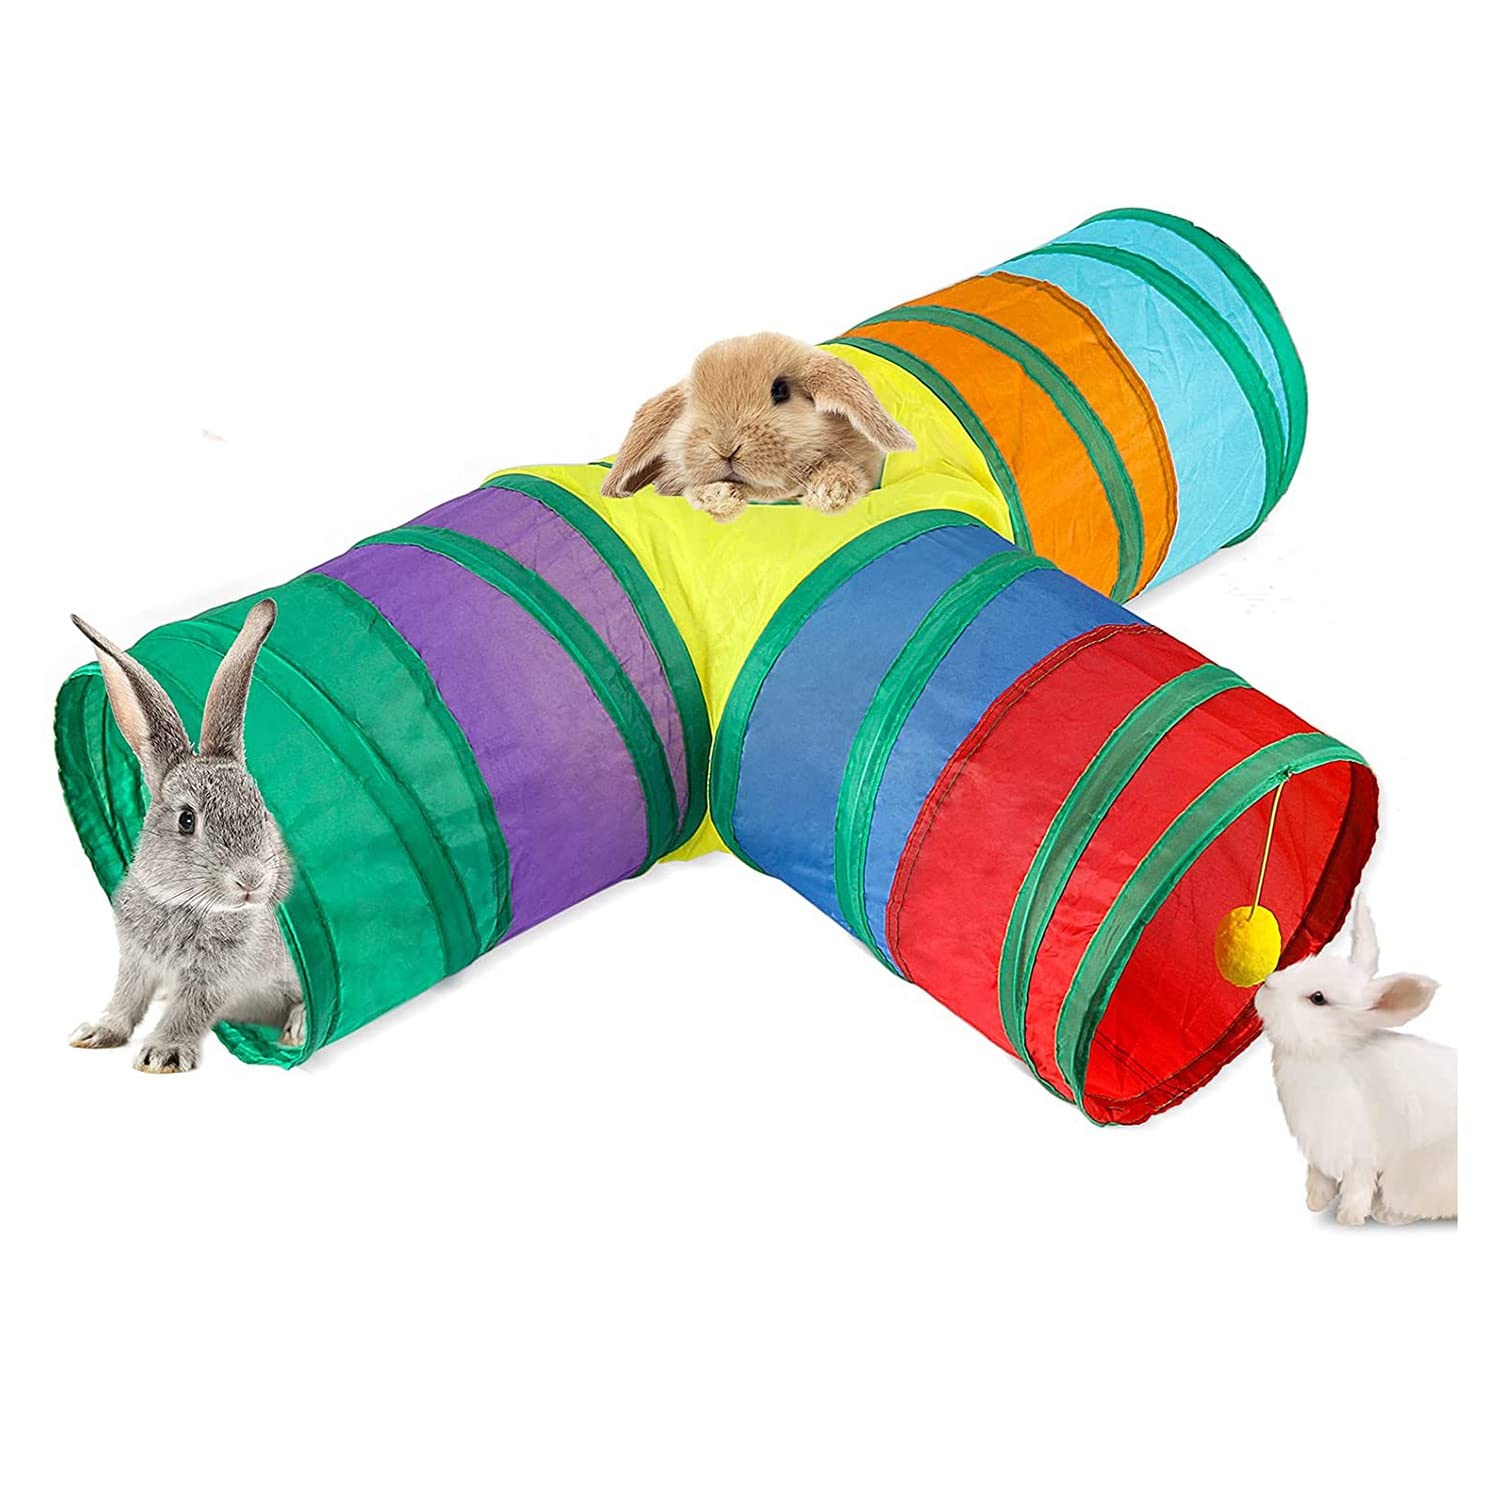 Qeunrtiy Bunny & Tubes Collapsible 3-Way Bunny Hideout Small